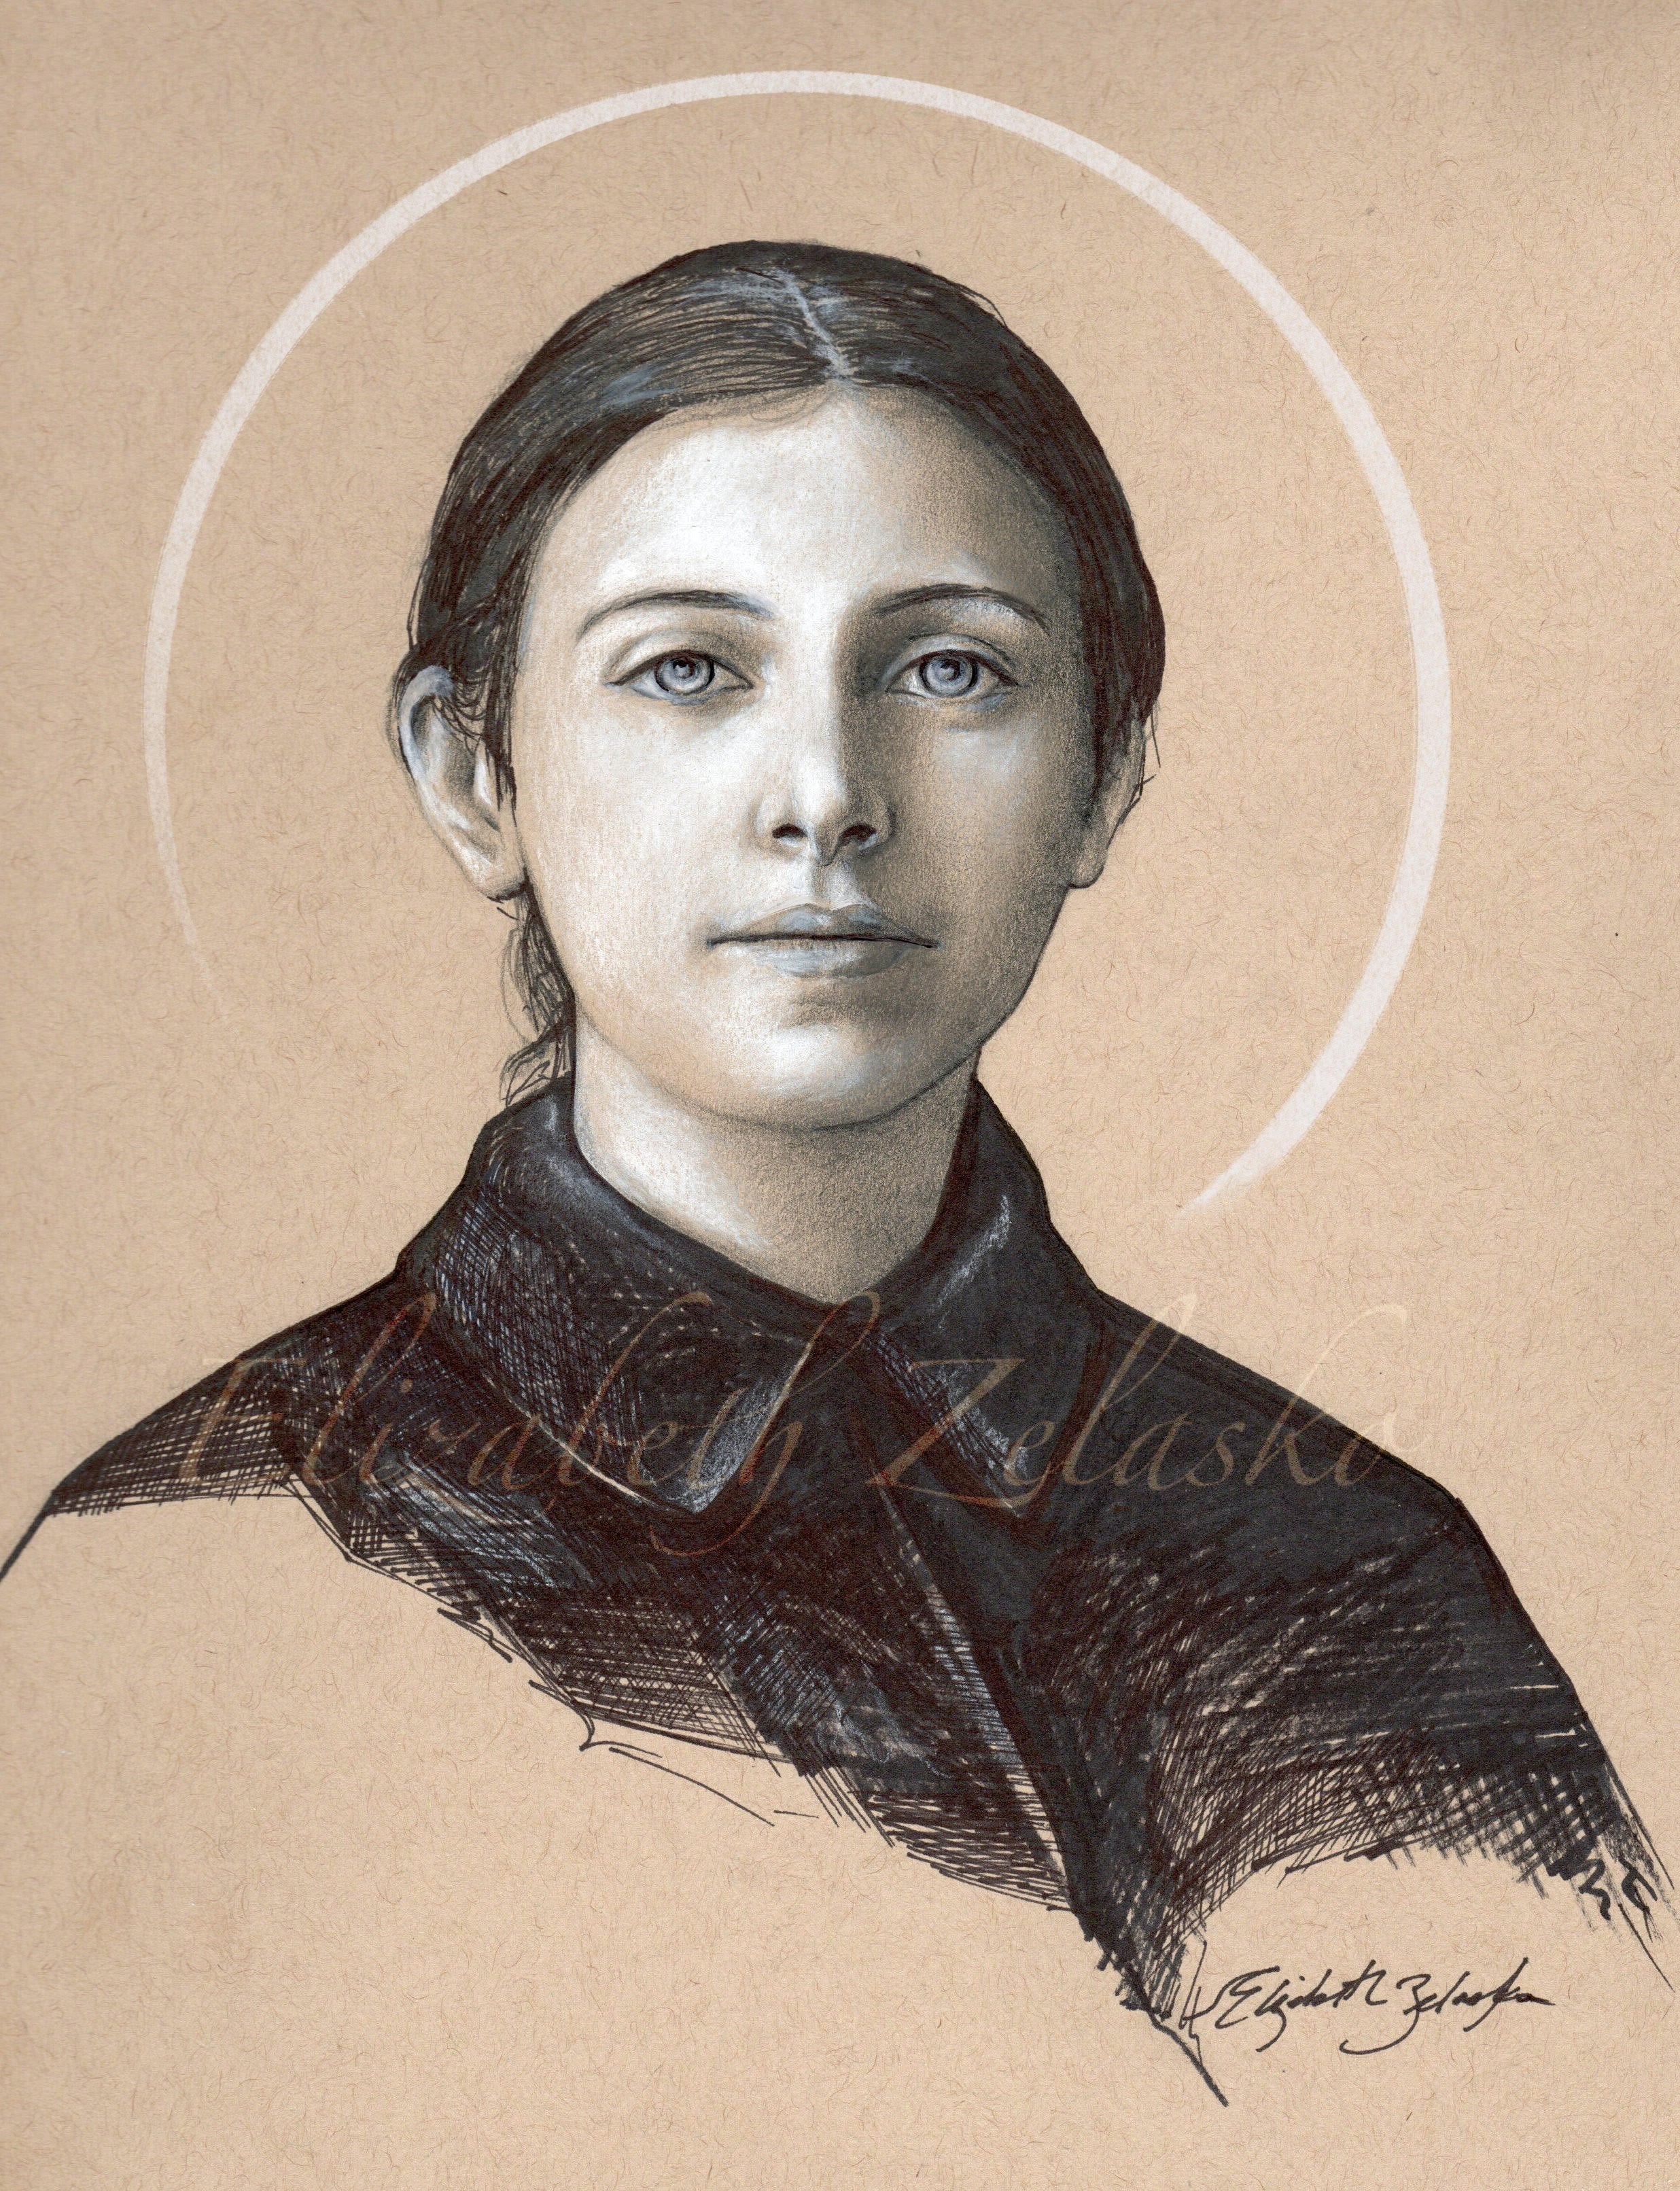 Saint Gemma Galgani